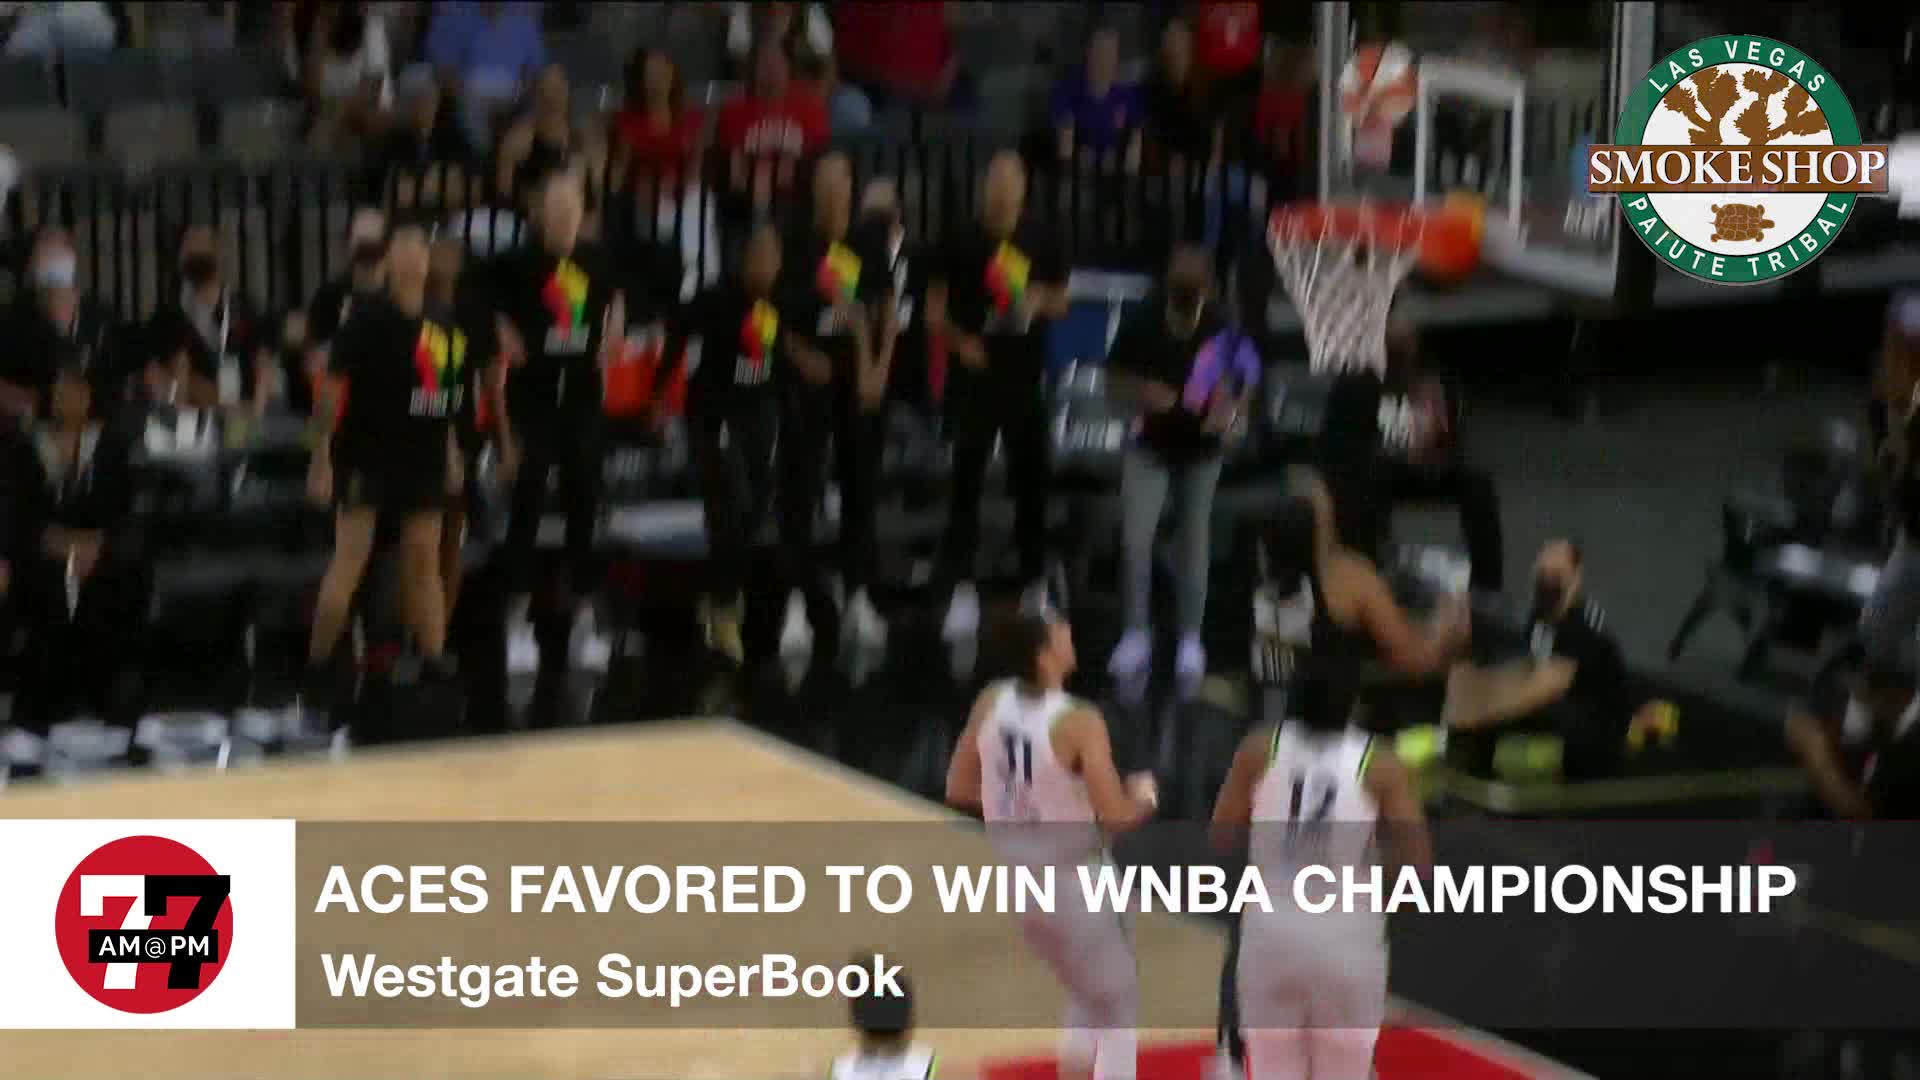 Las Vegas Aces favored to win WNBA Championship